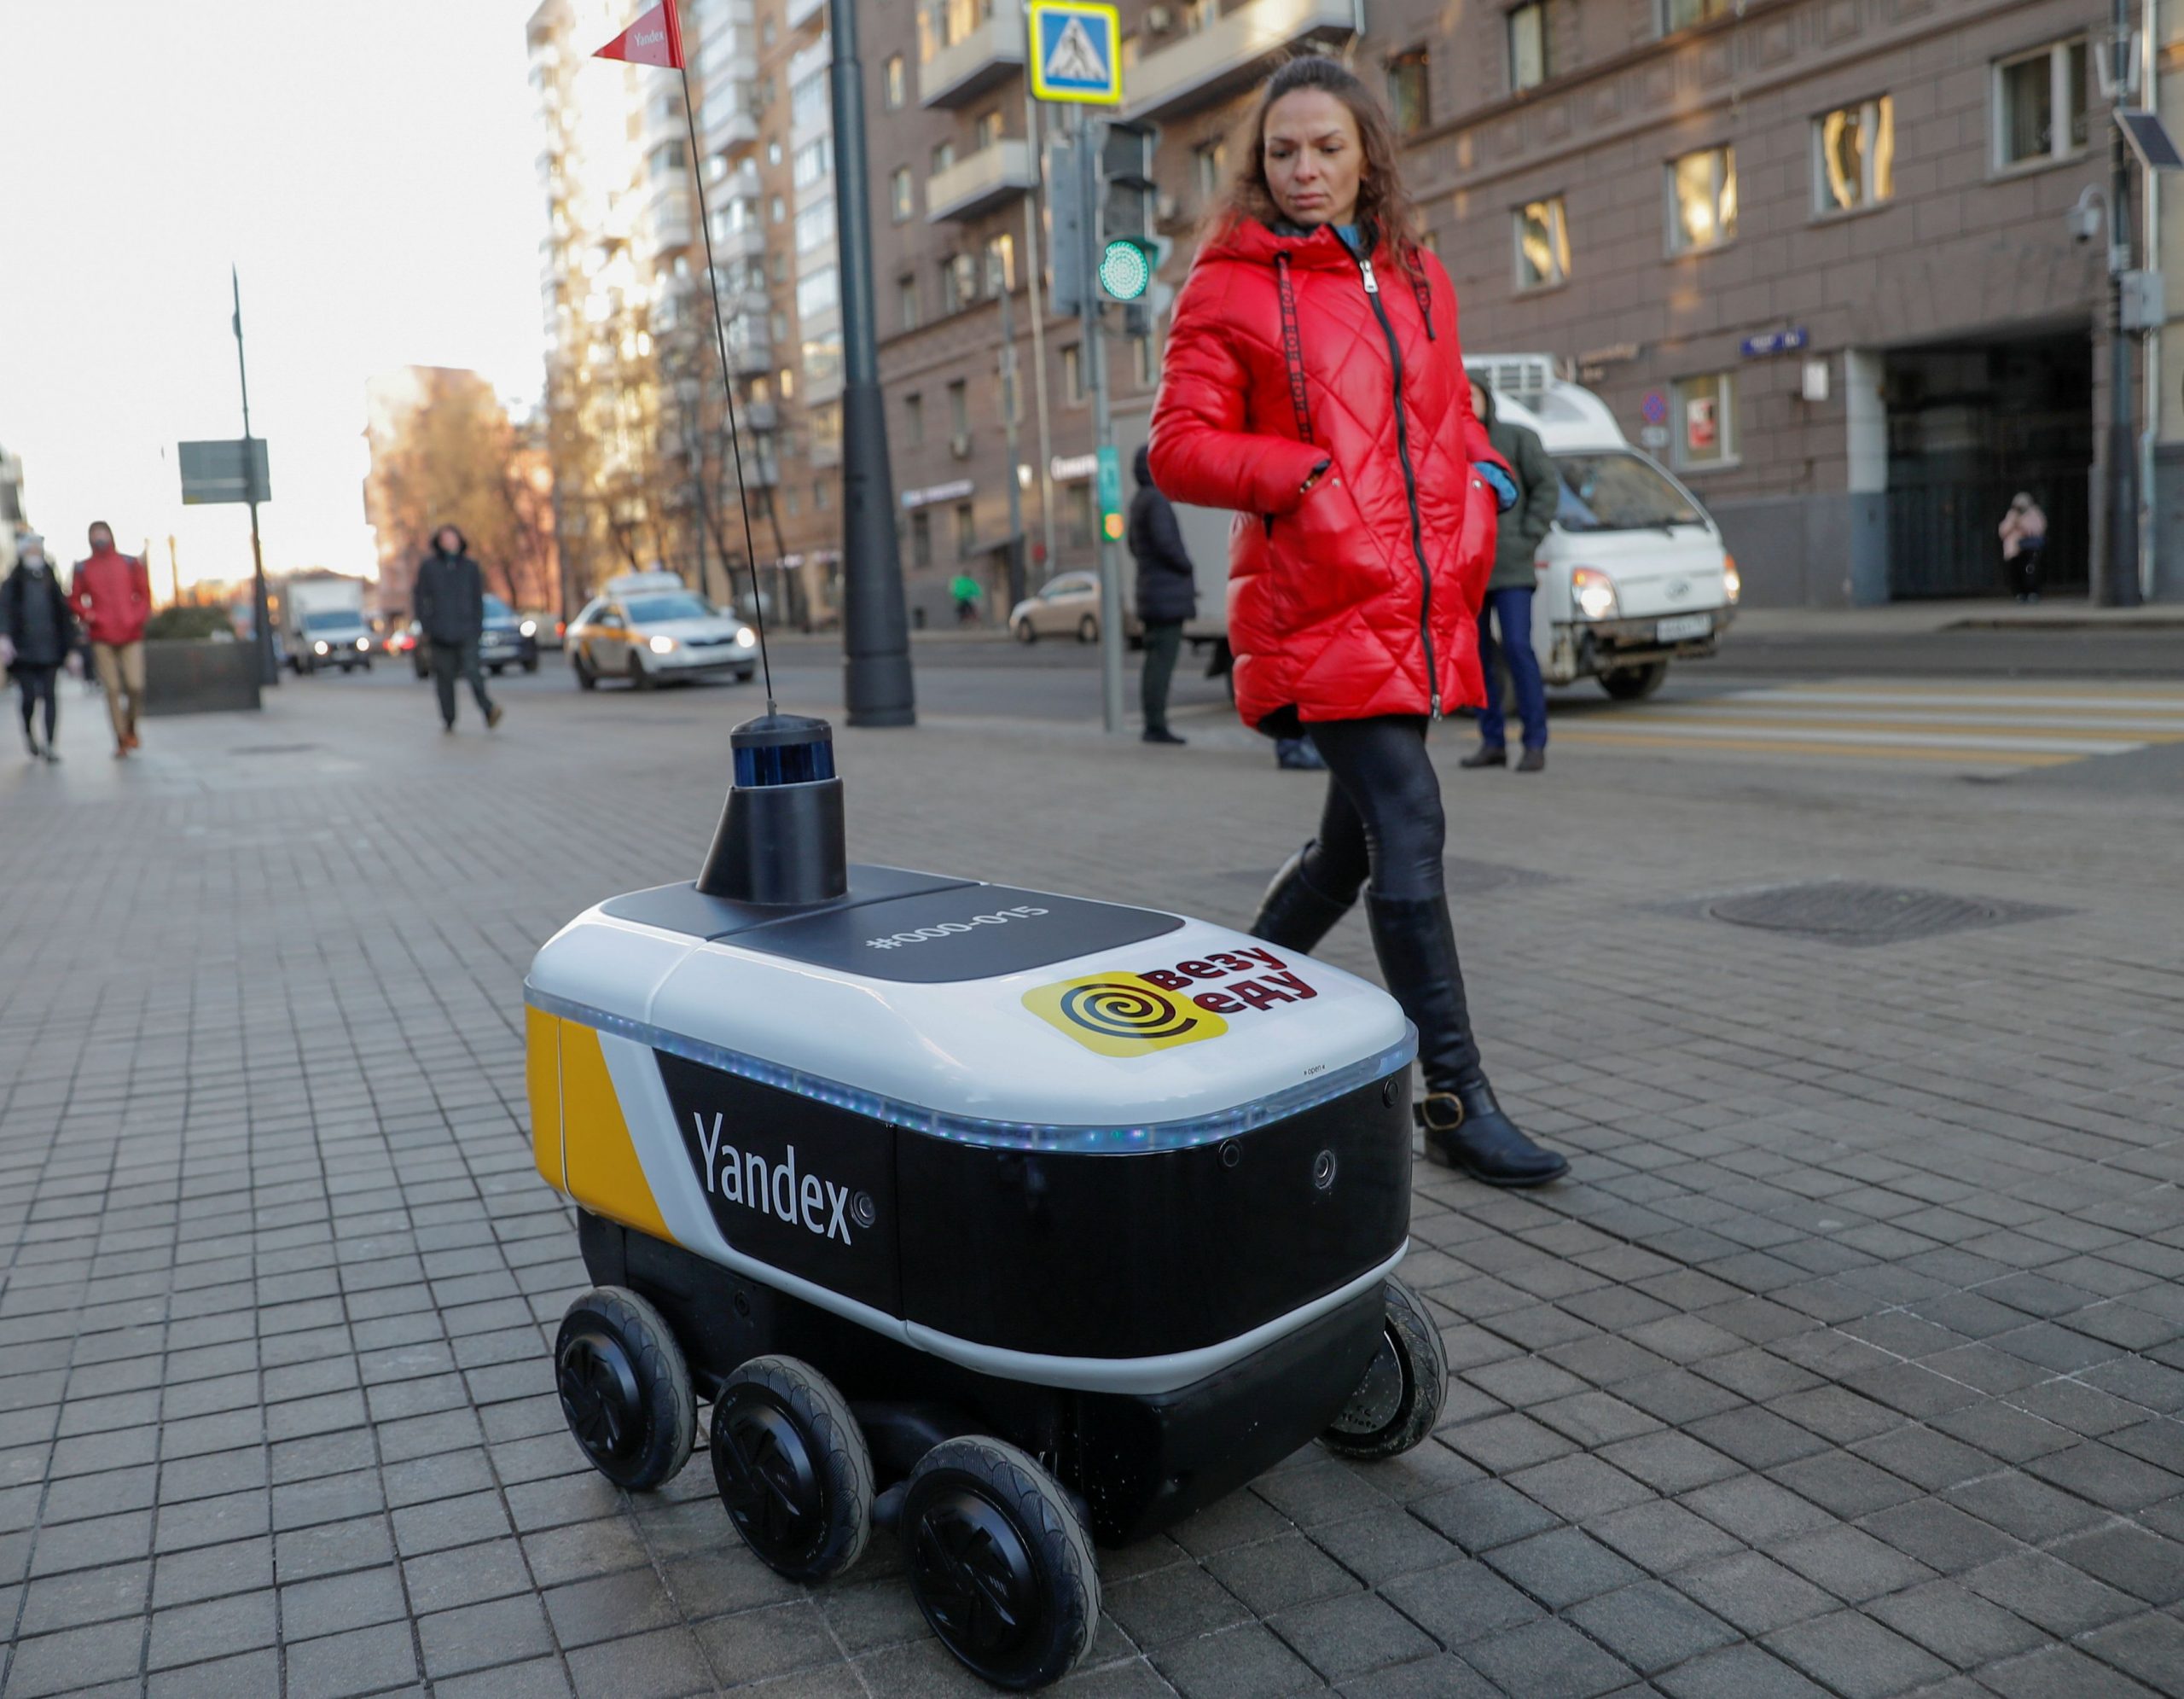 Yandex: Ρωσικό ρομπότ θα κάνει ντελίβερι σε φοιτητικές εστίες στις ΗΠΑ [Video]